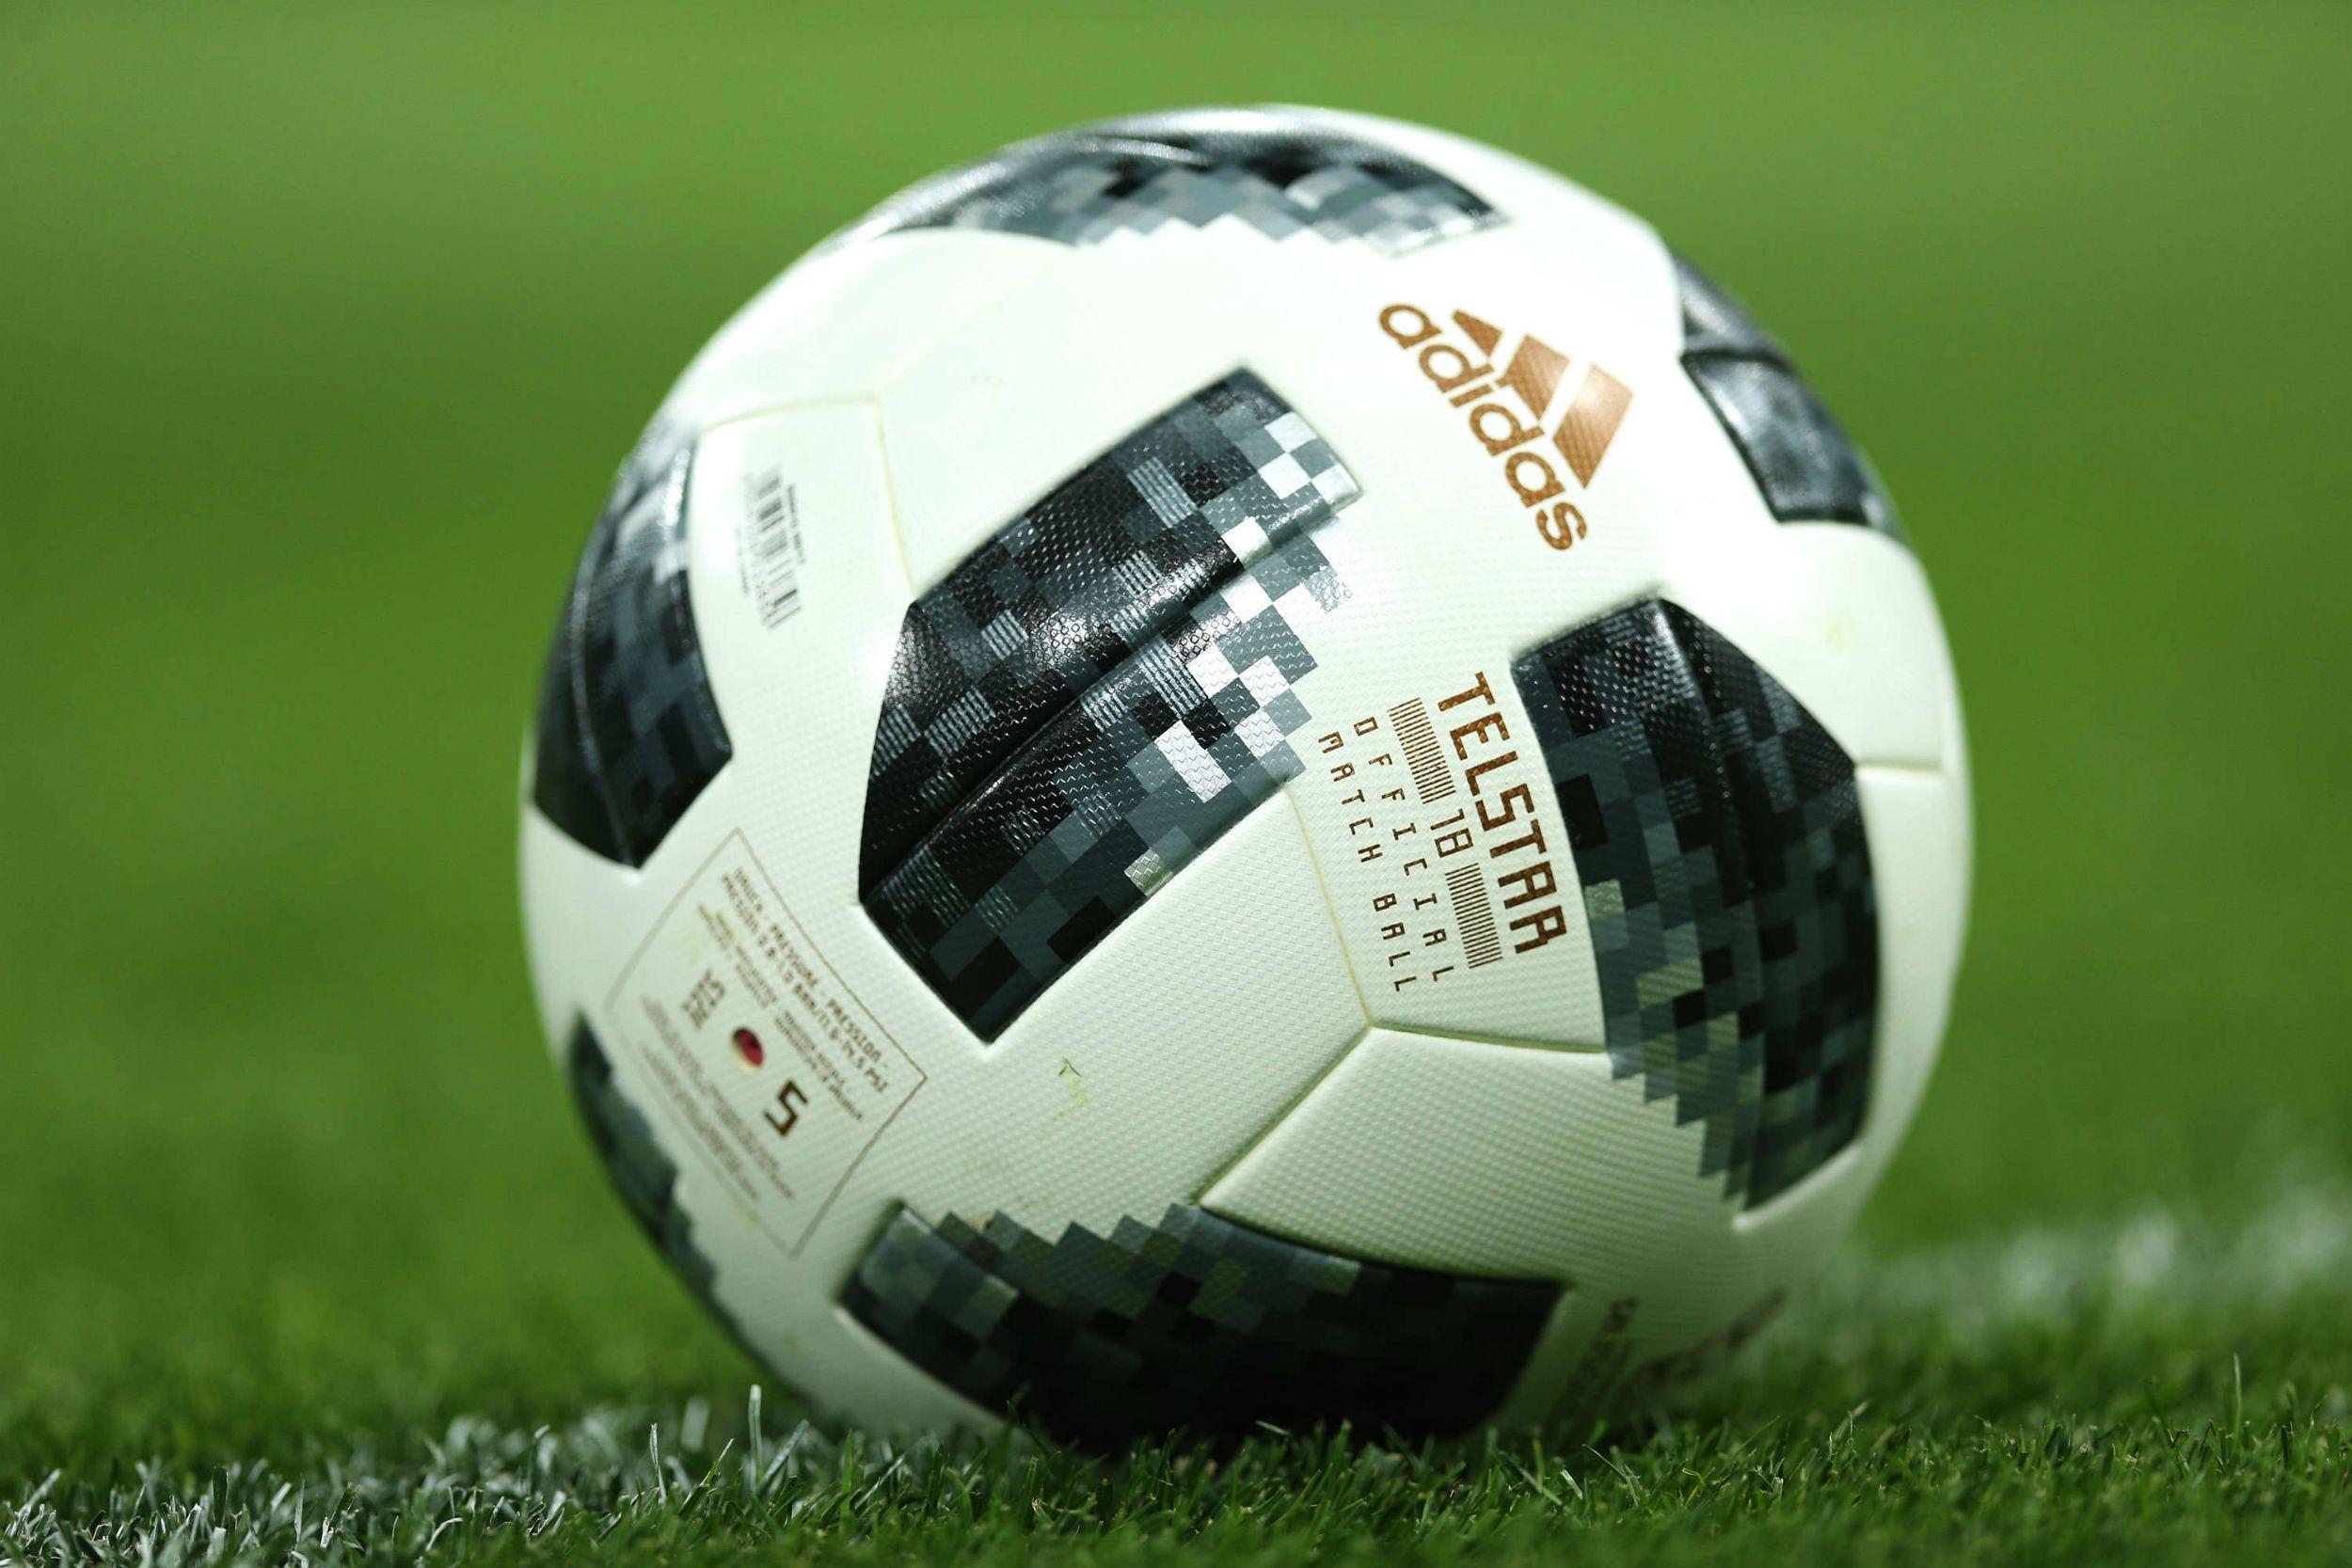 Adidas Telstar 18 ball on ground wallpaper. Fifa world cup 2018